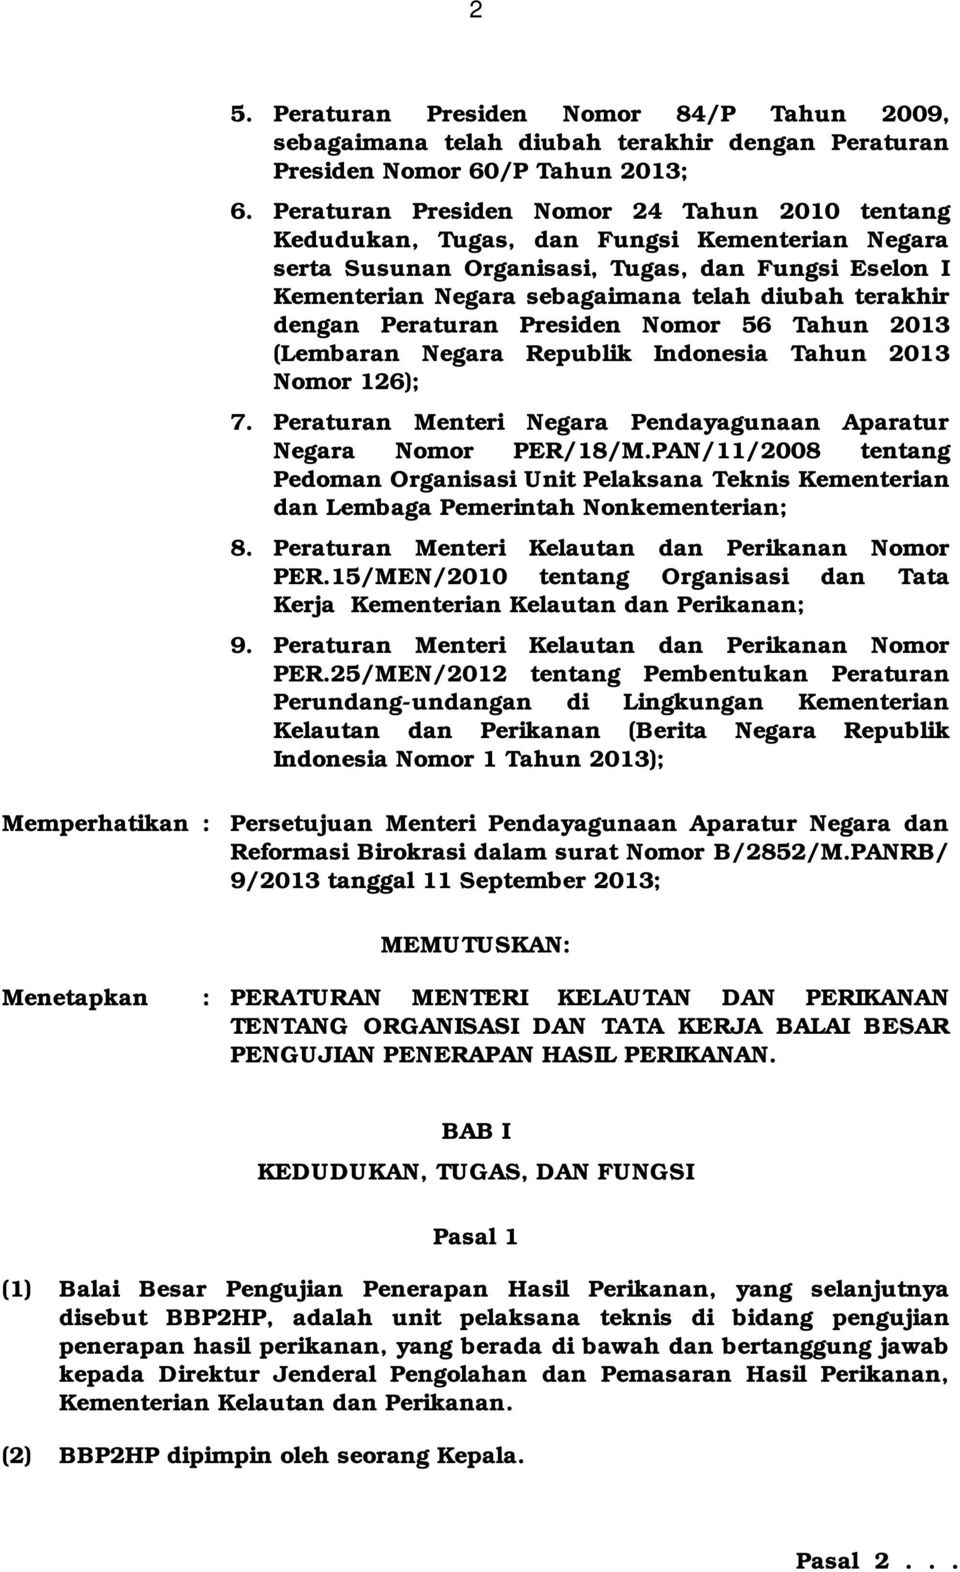 terakhir dengan Peraturan Presiden Nomor 56 Tahun 2013 (Lembaran Negara Republik Indonesia Tahun 2013 Nomor 126); 7. Peraturan Menteri Negara Pendayagunaan Aparatur Negara Nomor PER/18/M.